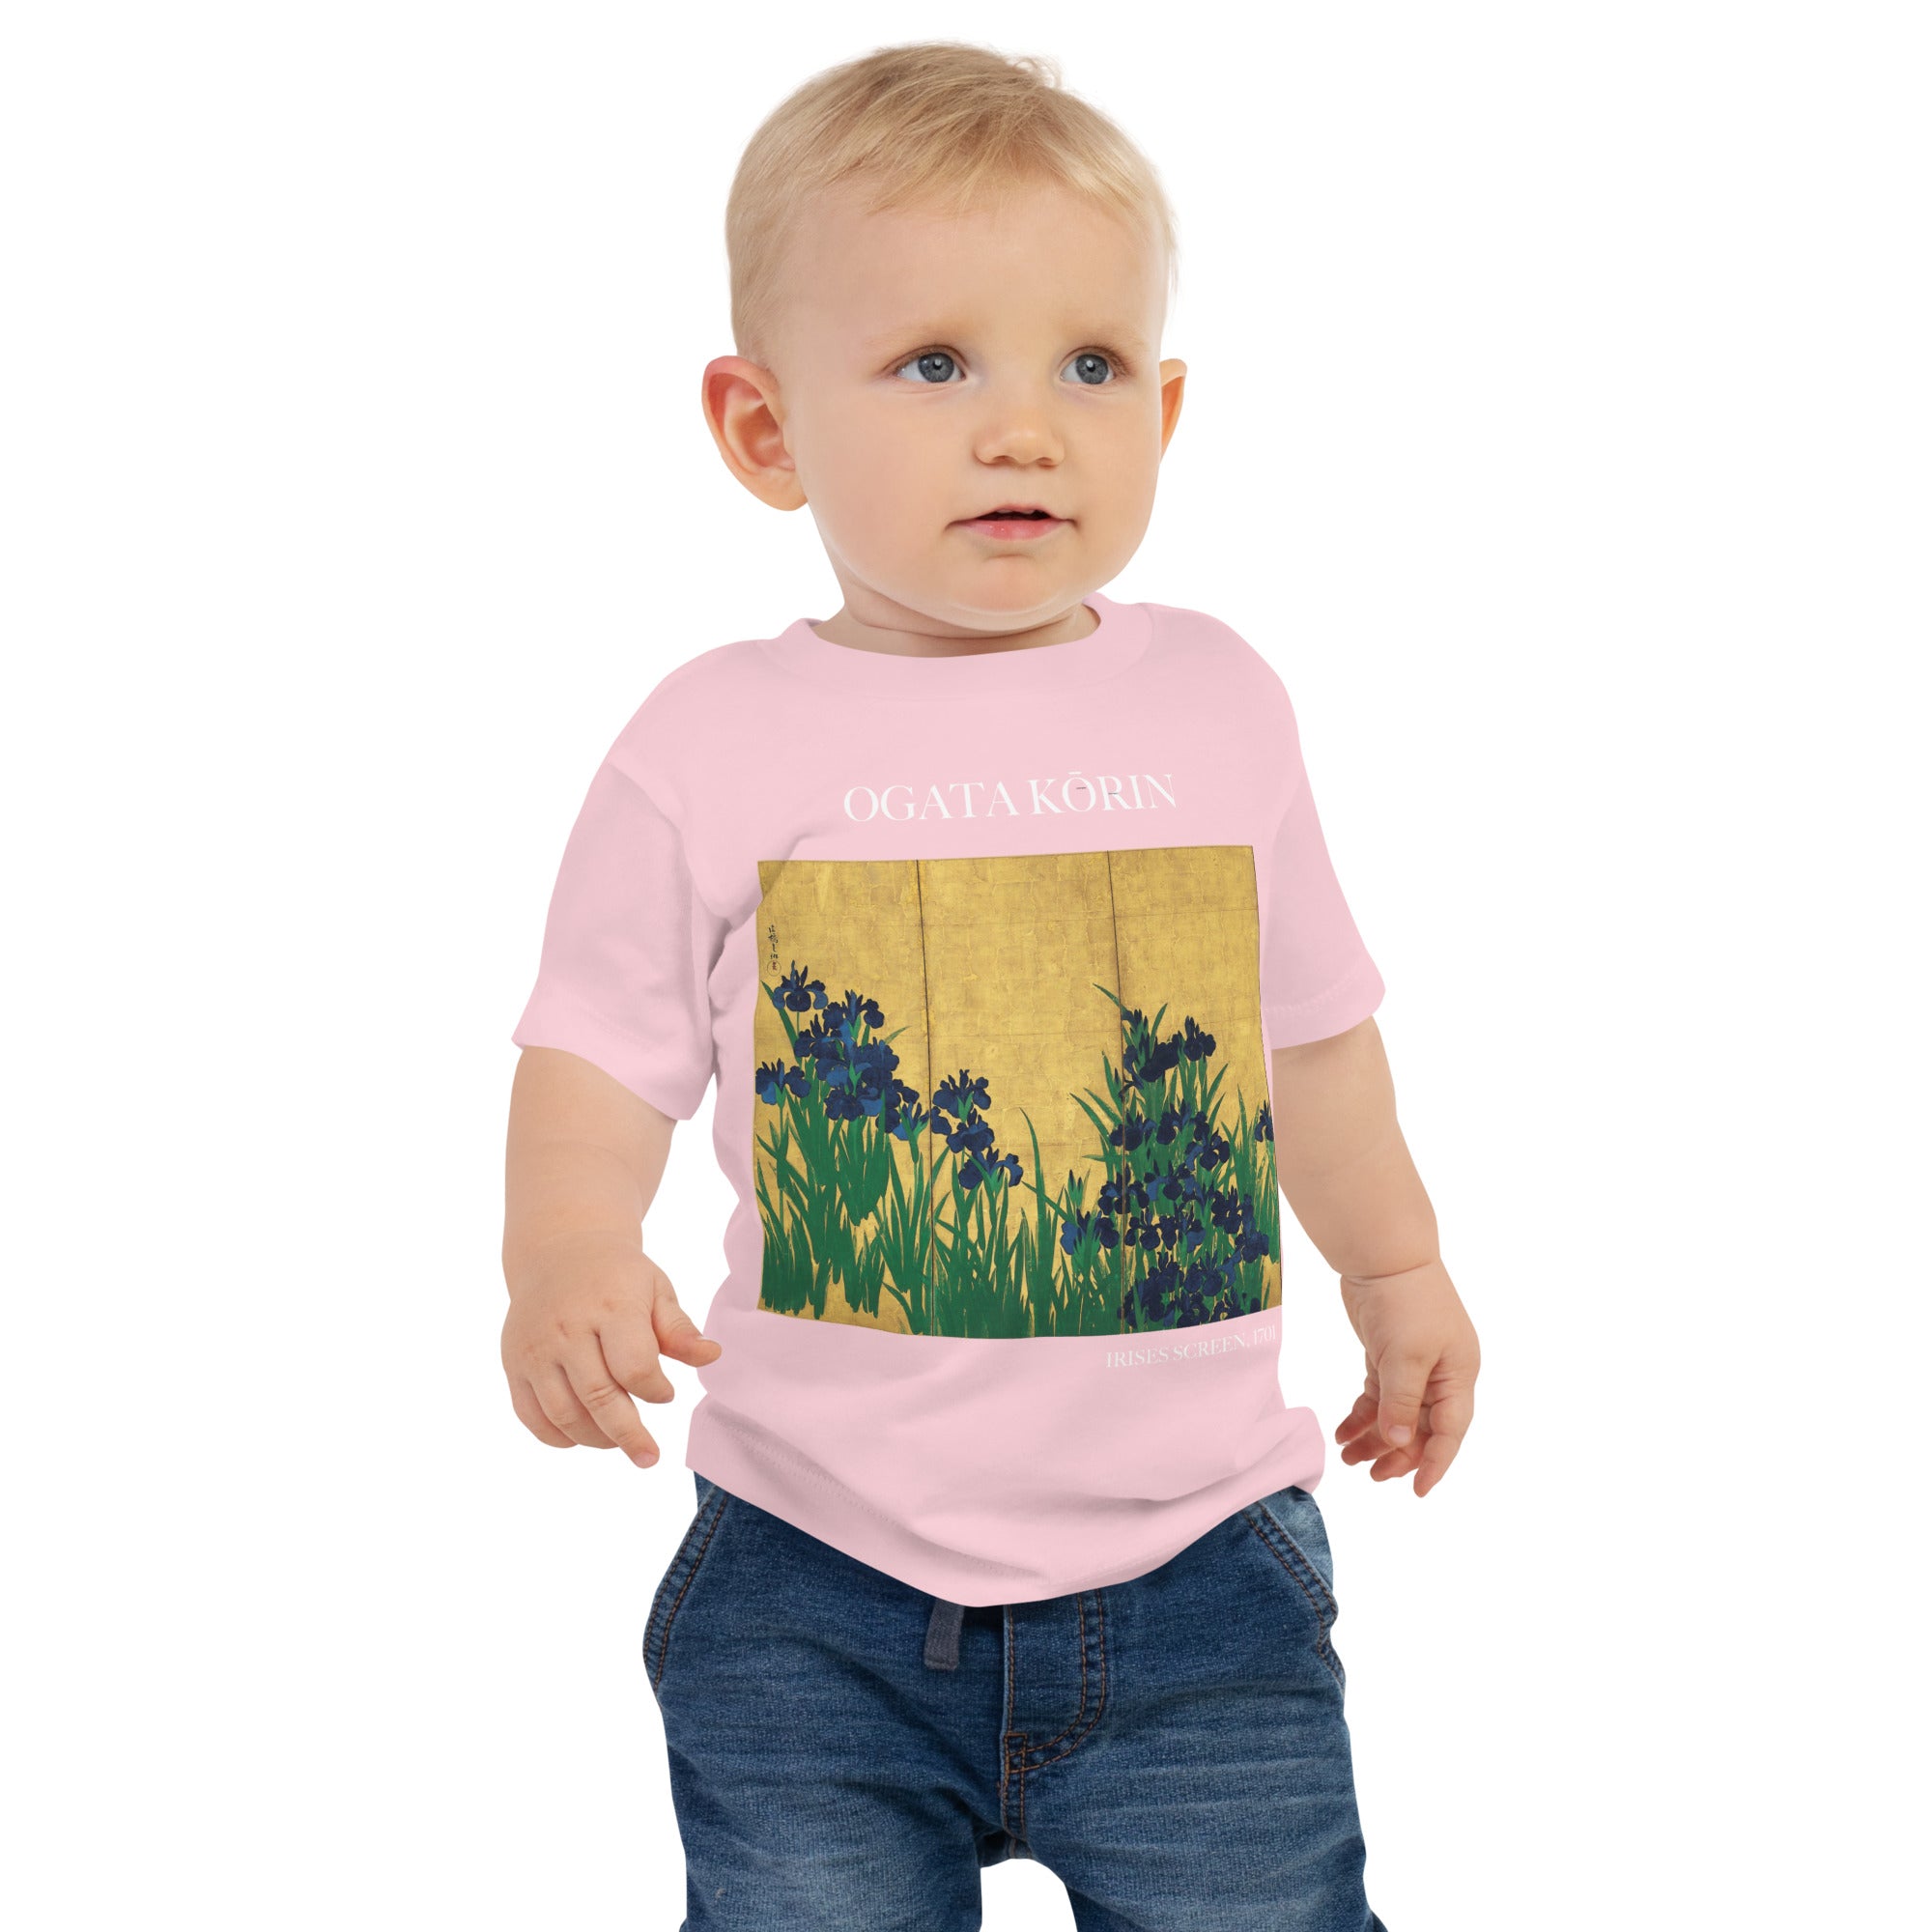 Ogata Kōrin 'Irises Screen' Famous Painting Baby Staple T-Shirt | Premium Baby Art Tee